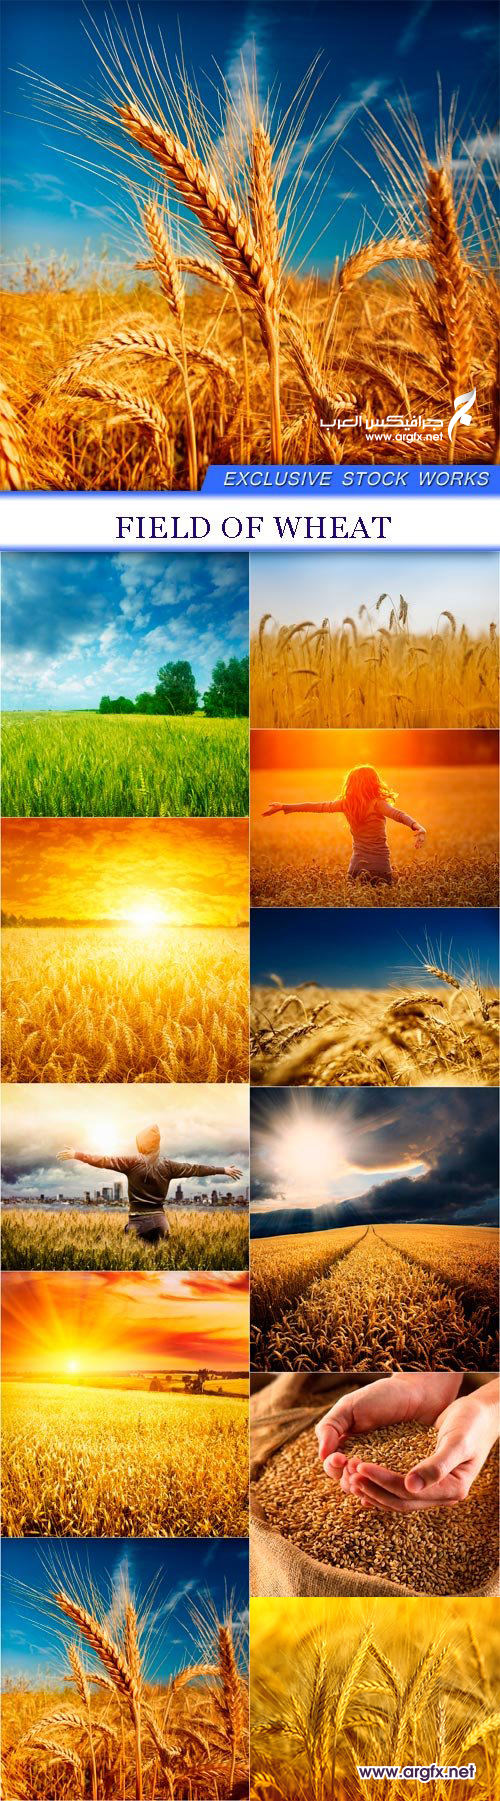  Field of wheat 11X JPEG